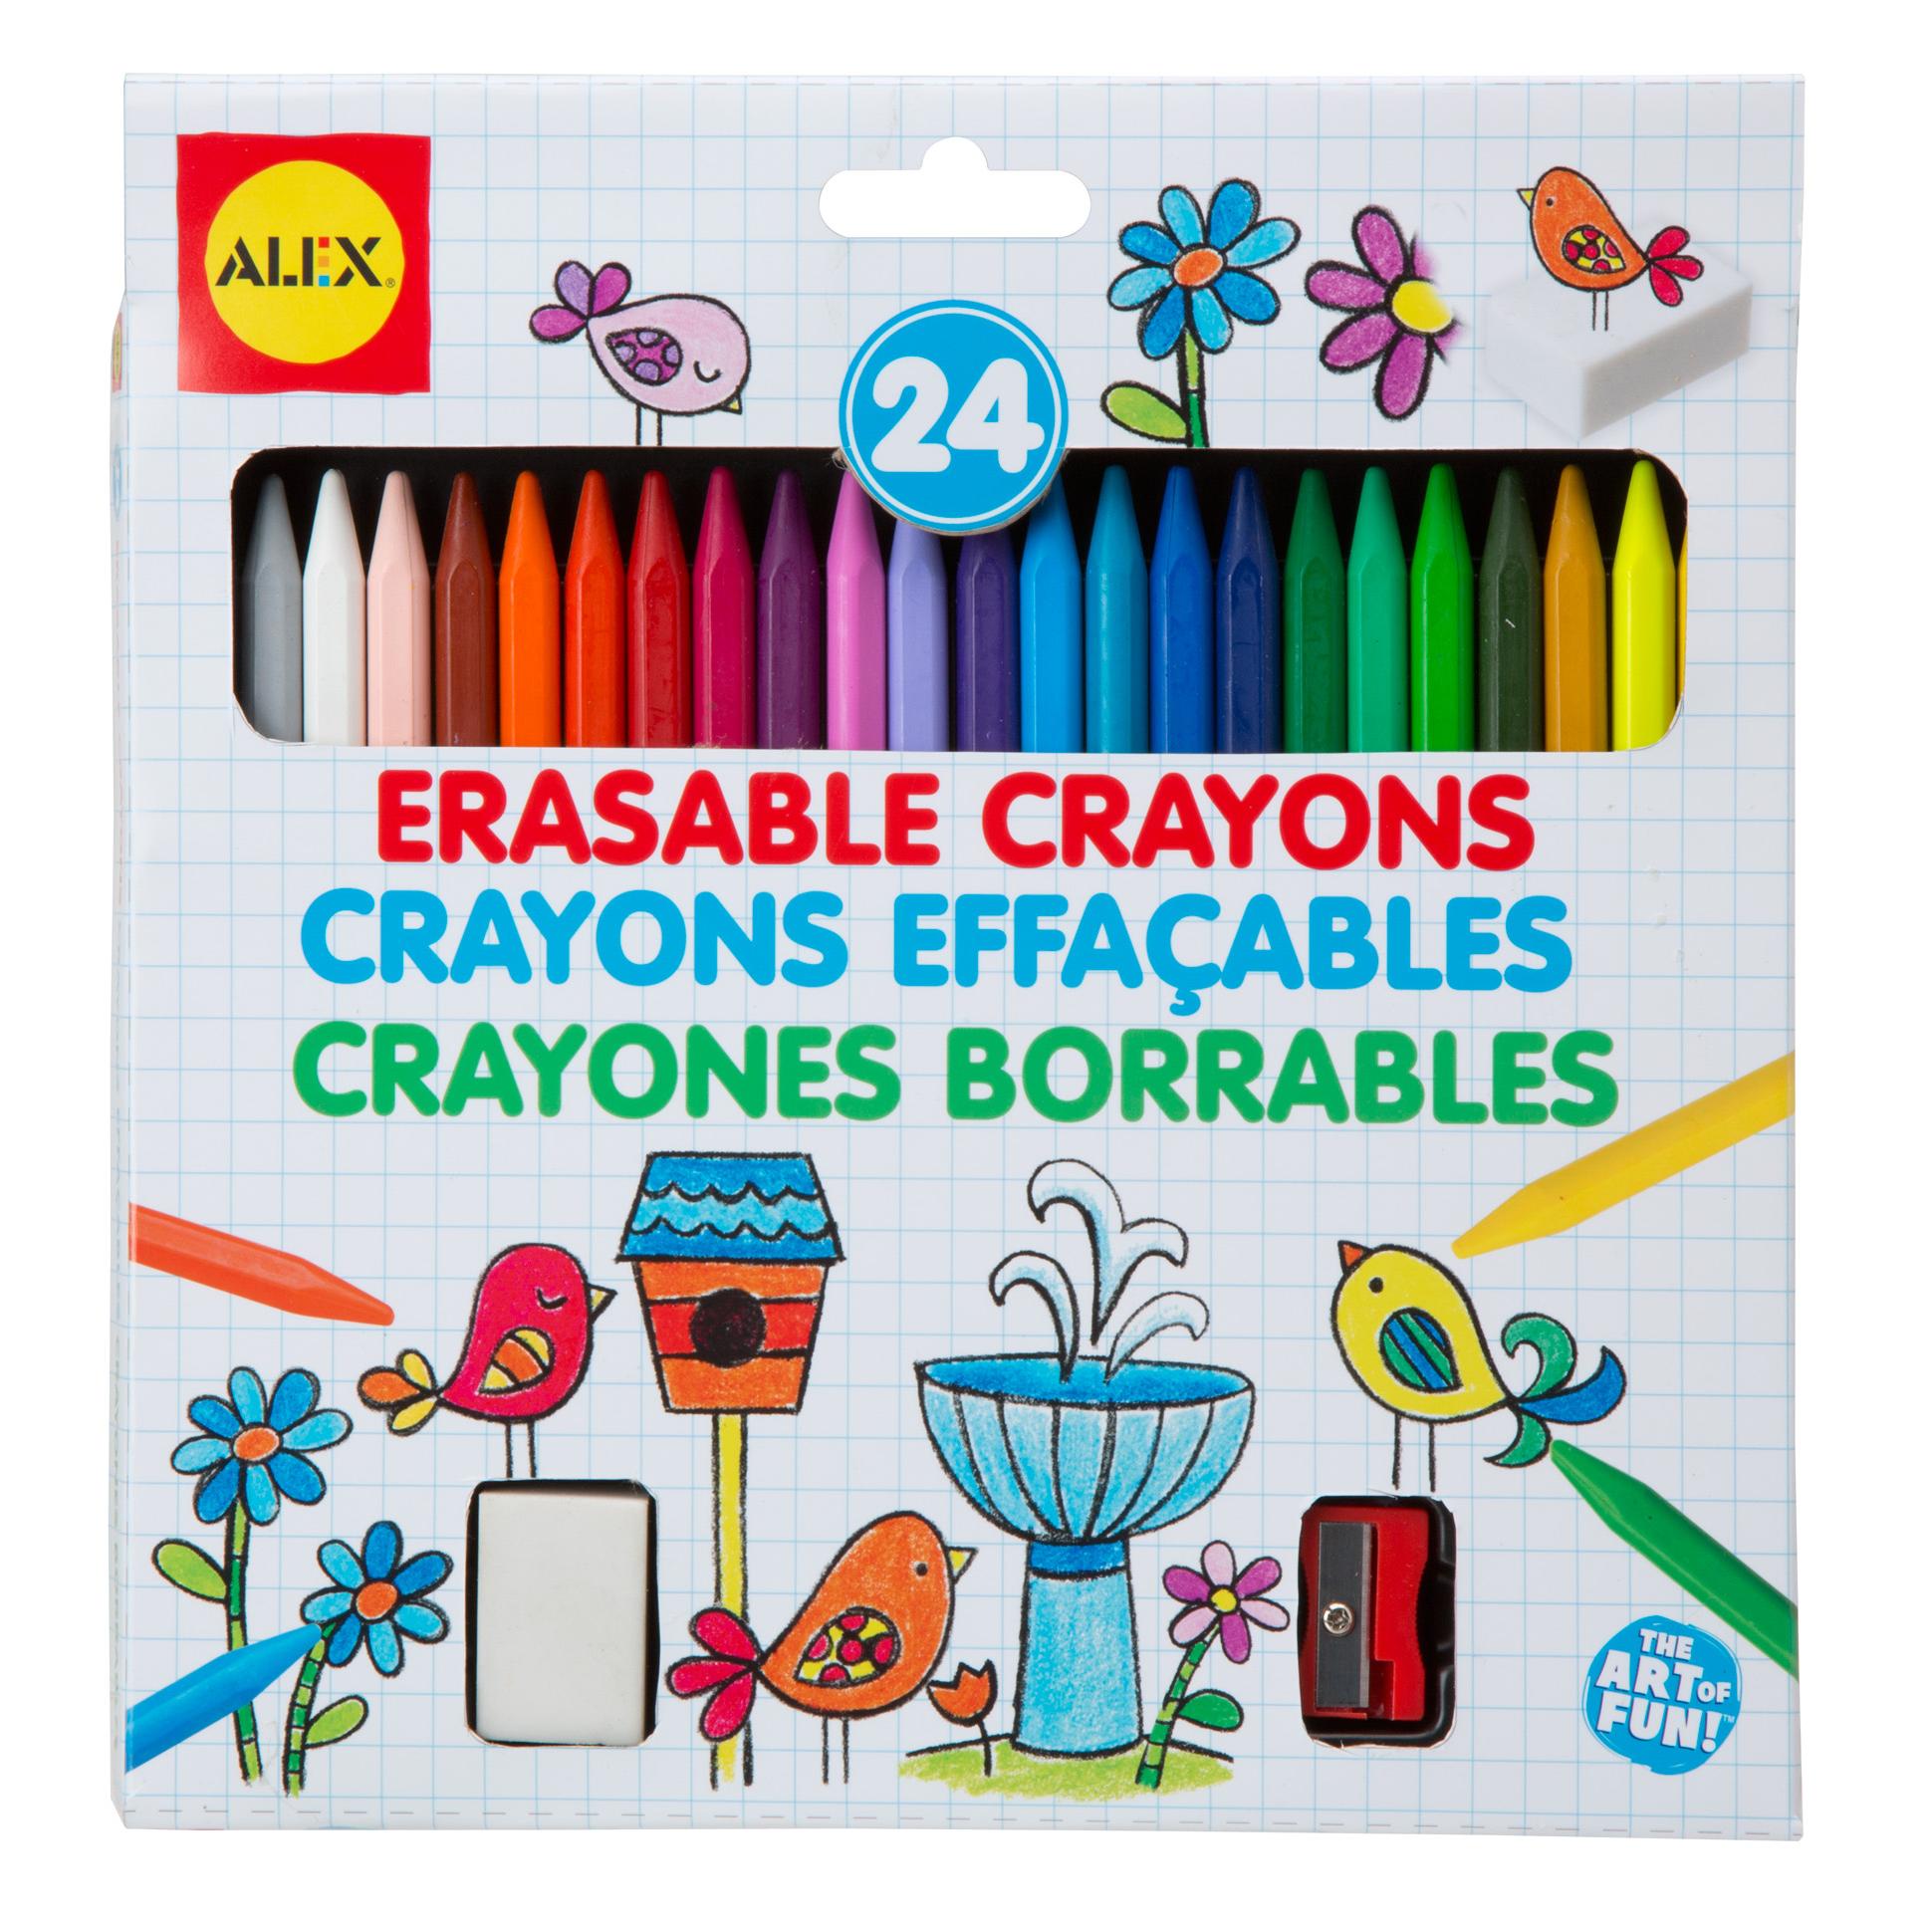 24 crayons effaçables